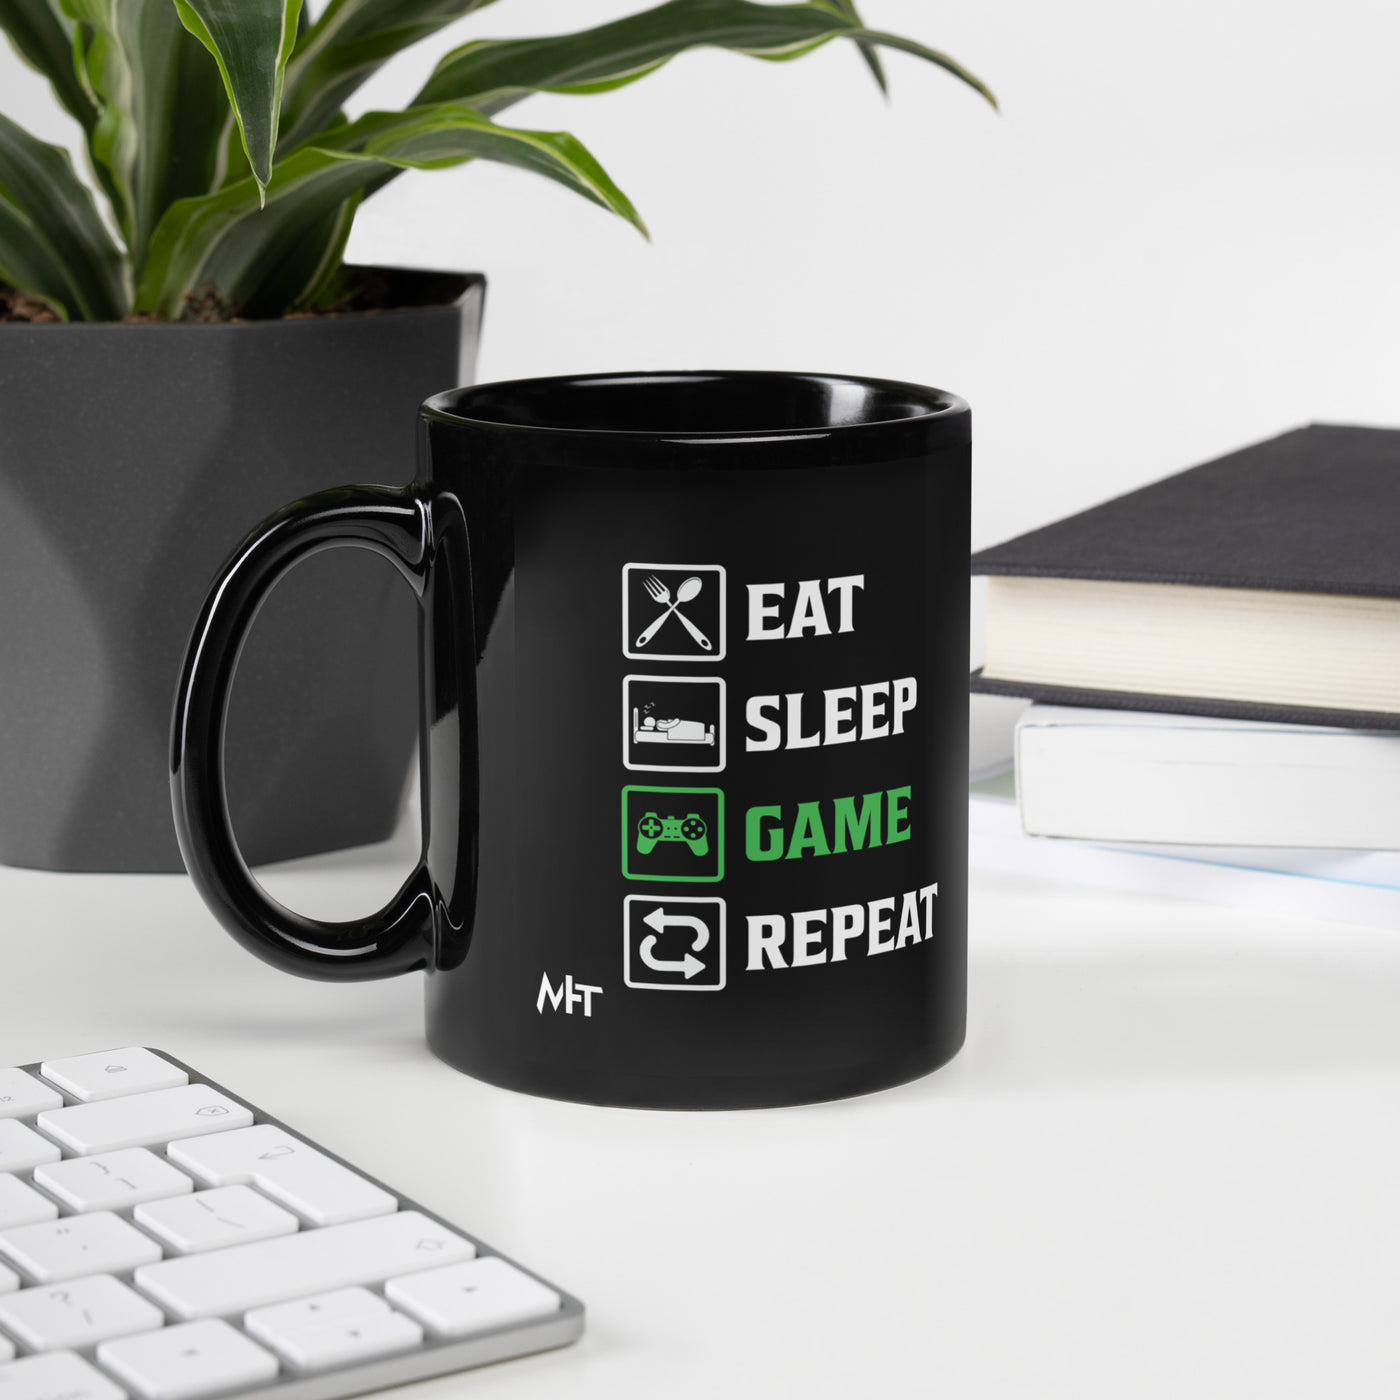 Eat, Sleep, GAME, Repeat - Black Glossy Mug